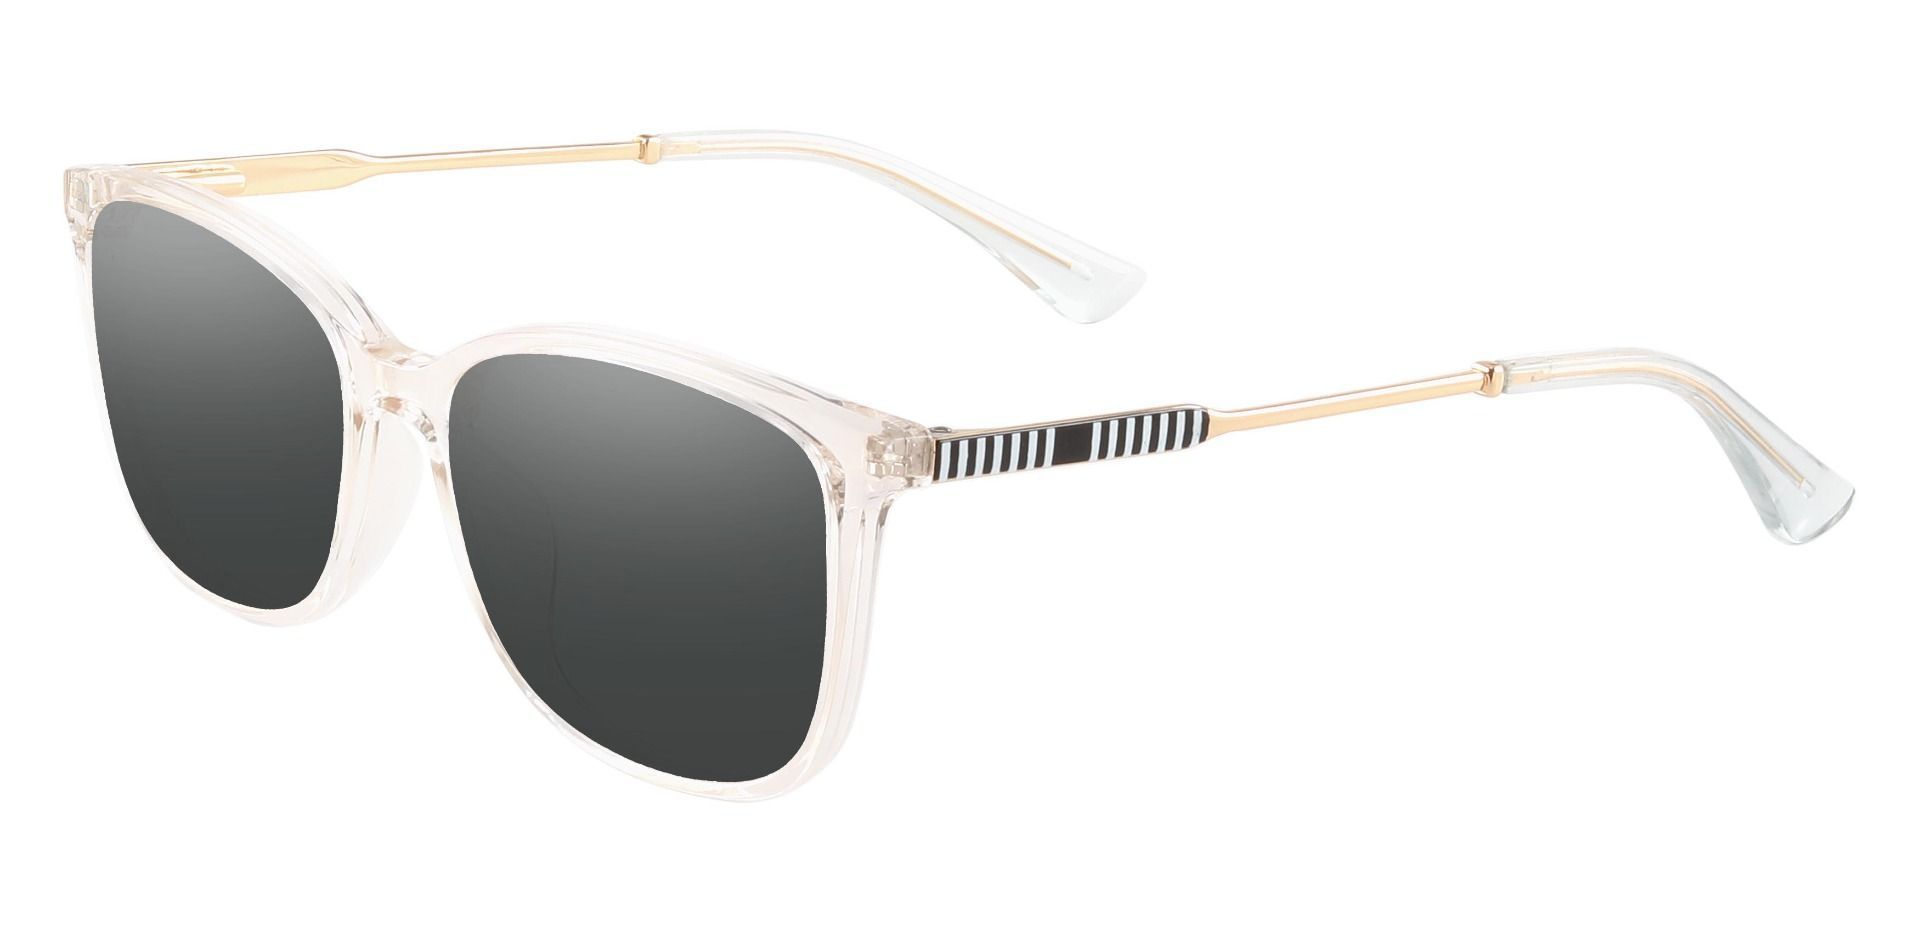 Miami Rectangle Progressive Sunglasses - Clear Frame With Gray Lenses